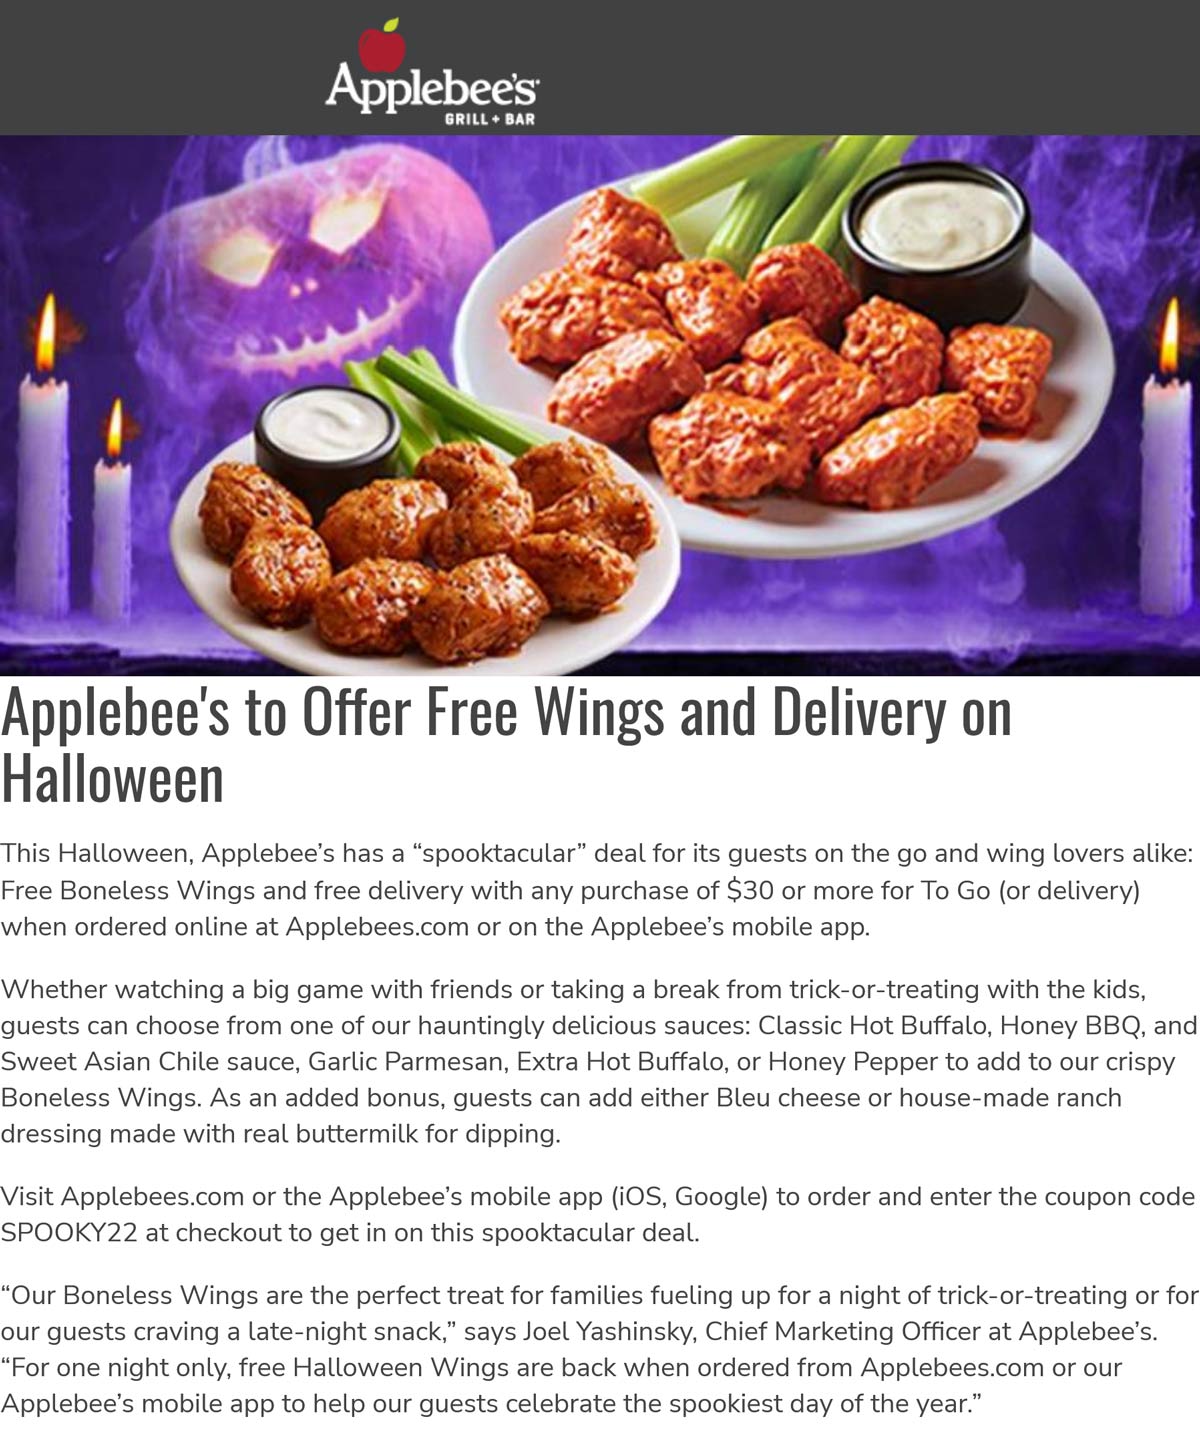 Applebees restaurants Coupon  Free boneless wings & delivery on $30 today at Applebees restaurants via promo code SPOOKY22 #applebees 